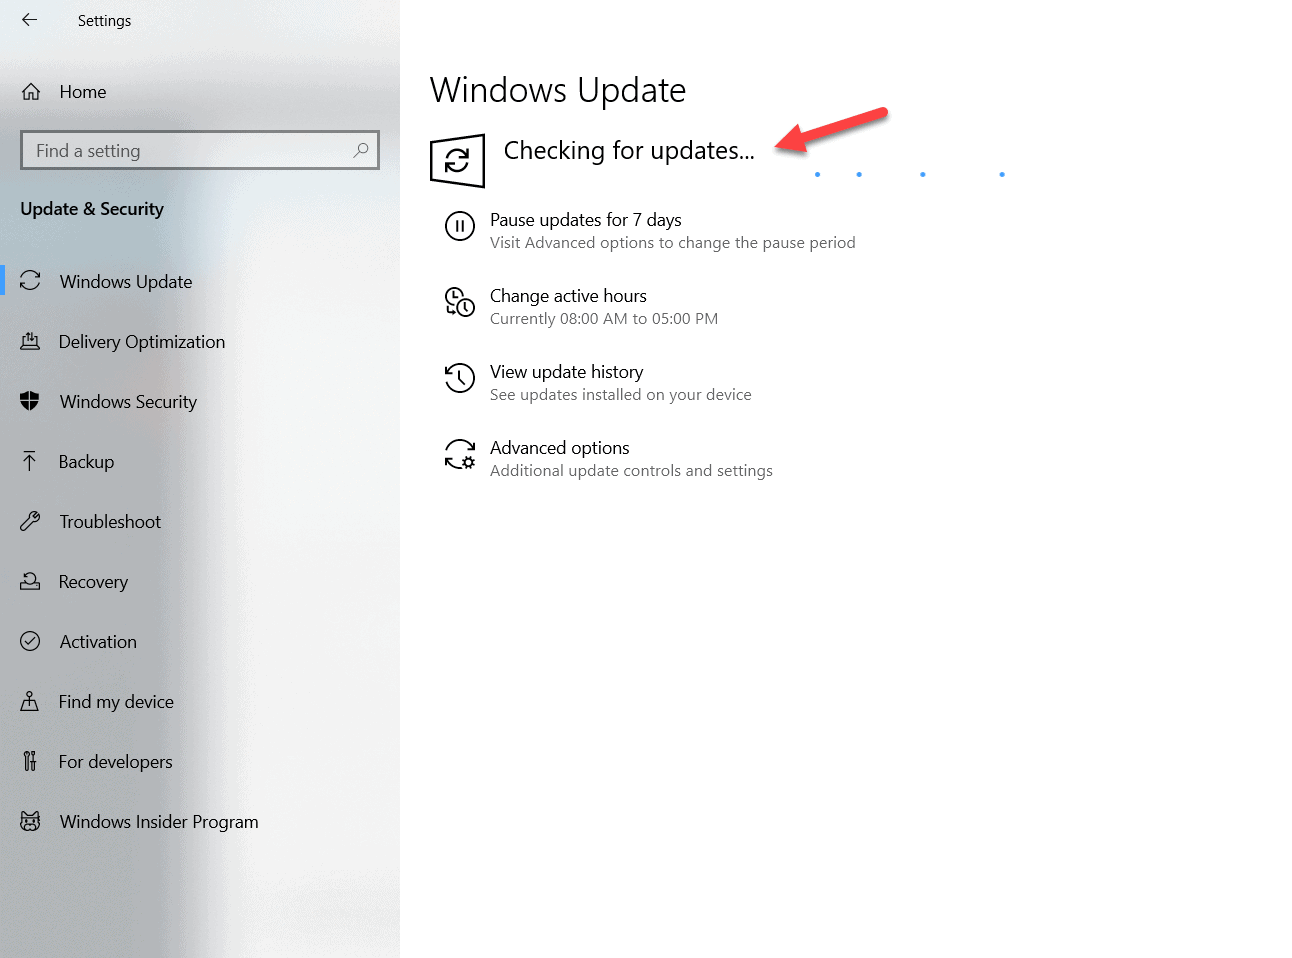 Destiny 2 not working on Windows 10